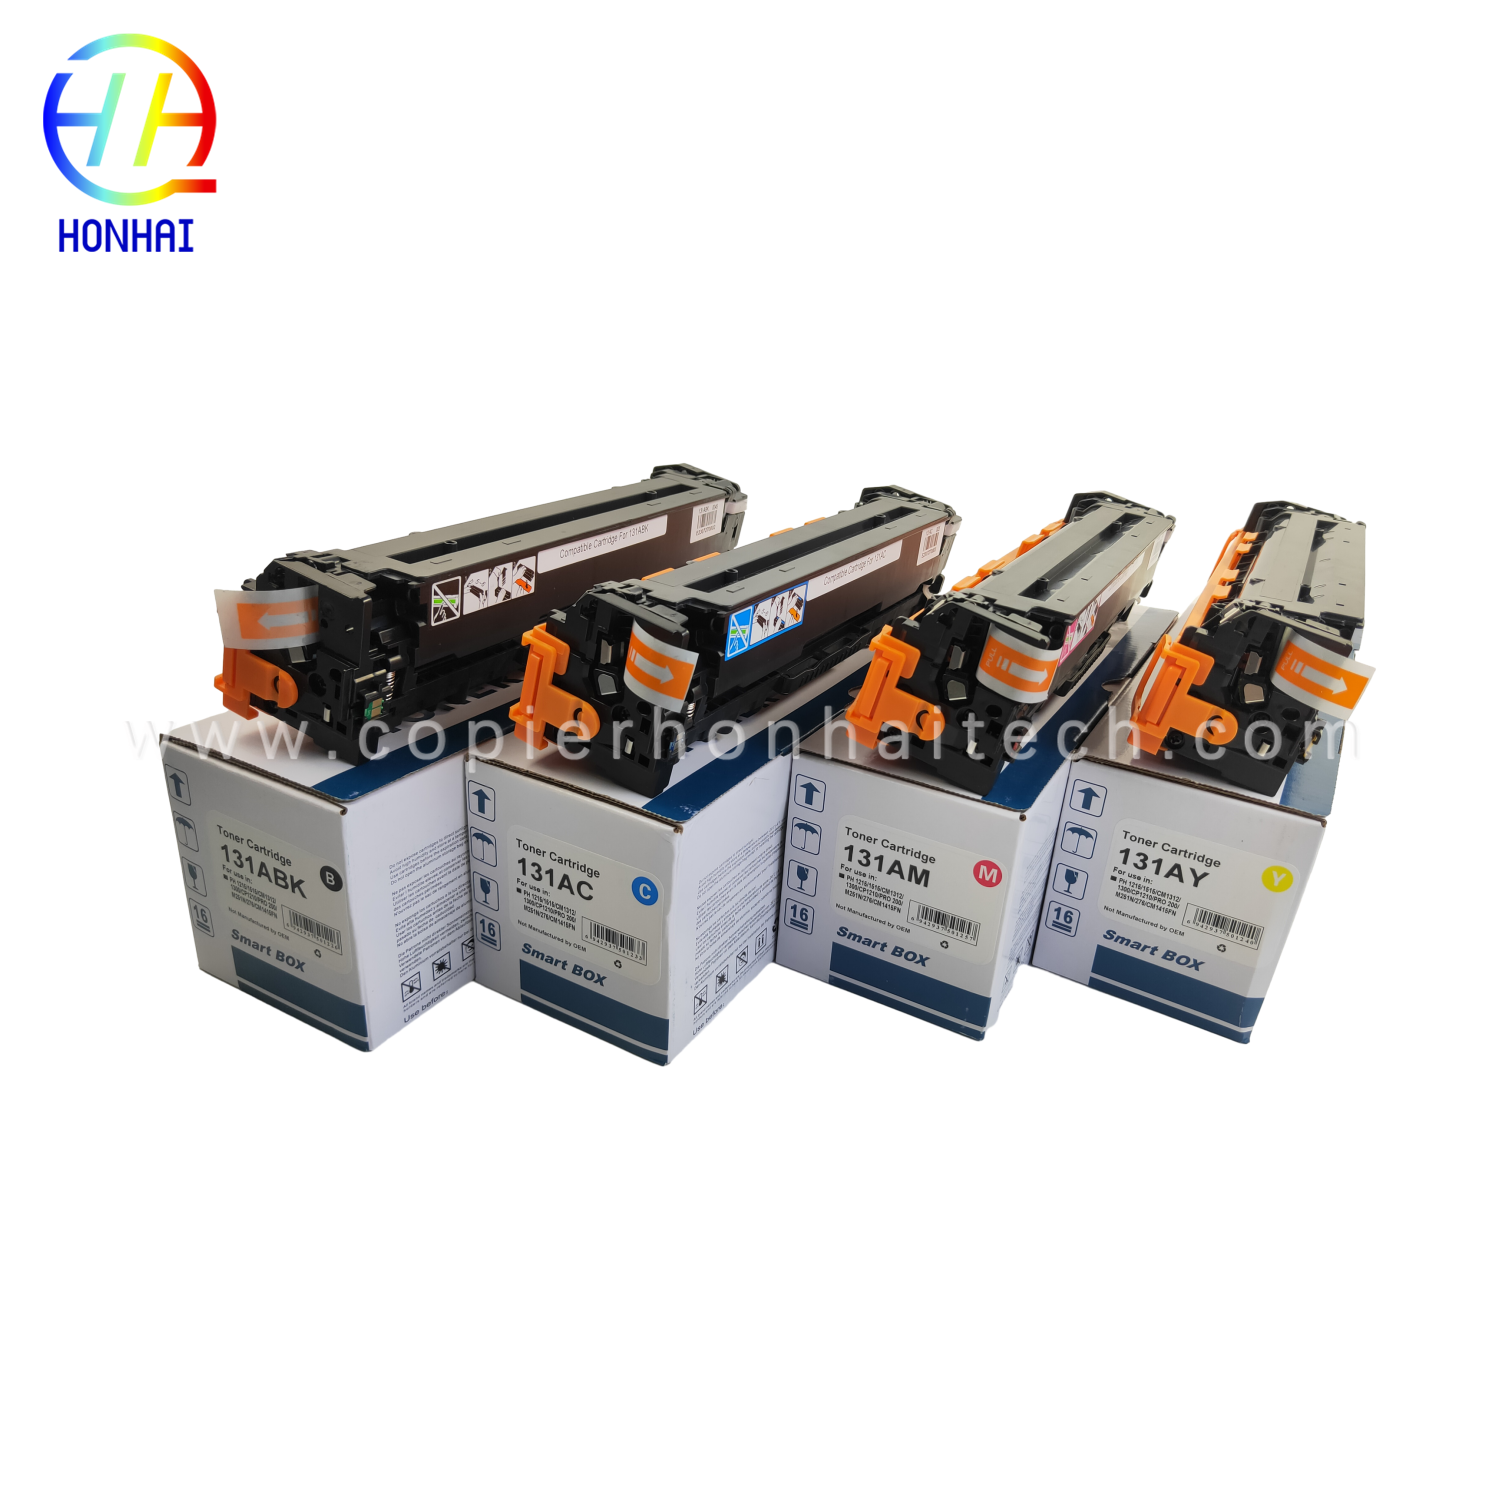 https://www.copierhonhaitech.com/toner-cartridge-for-hp-laserjet-pro-200- رەڭگى- 251nw